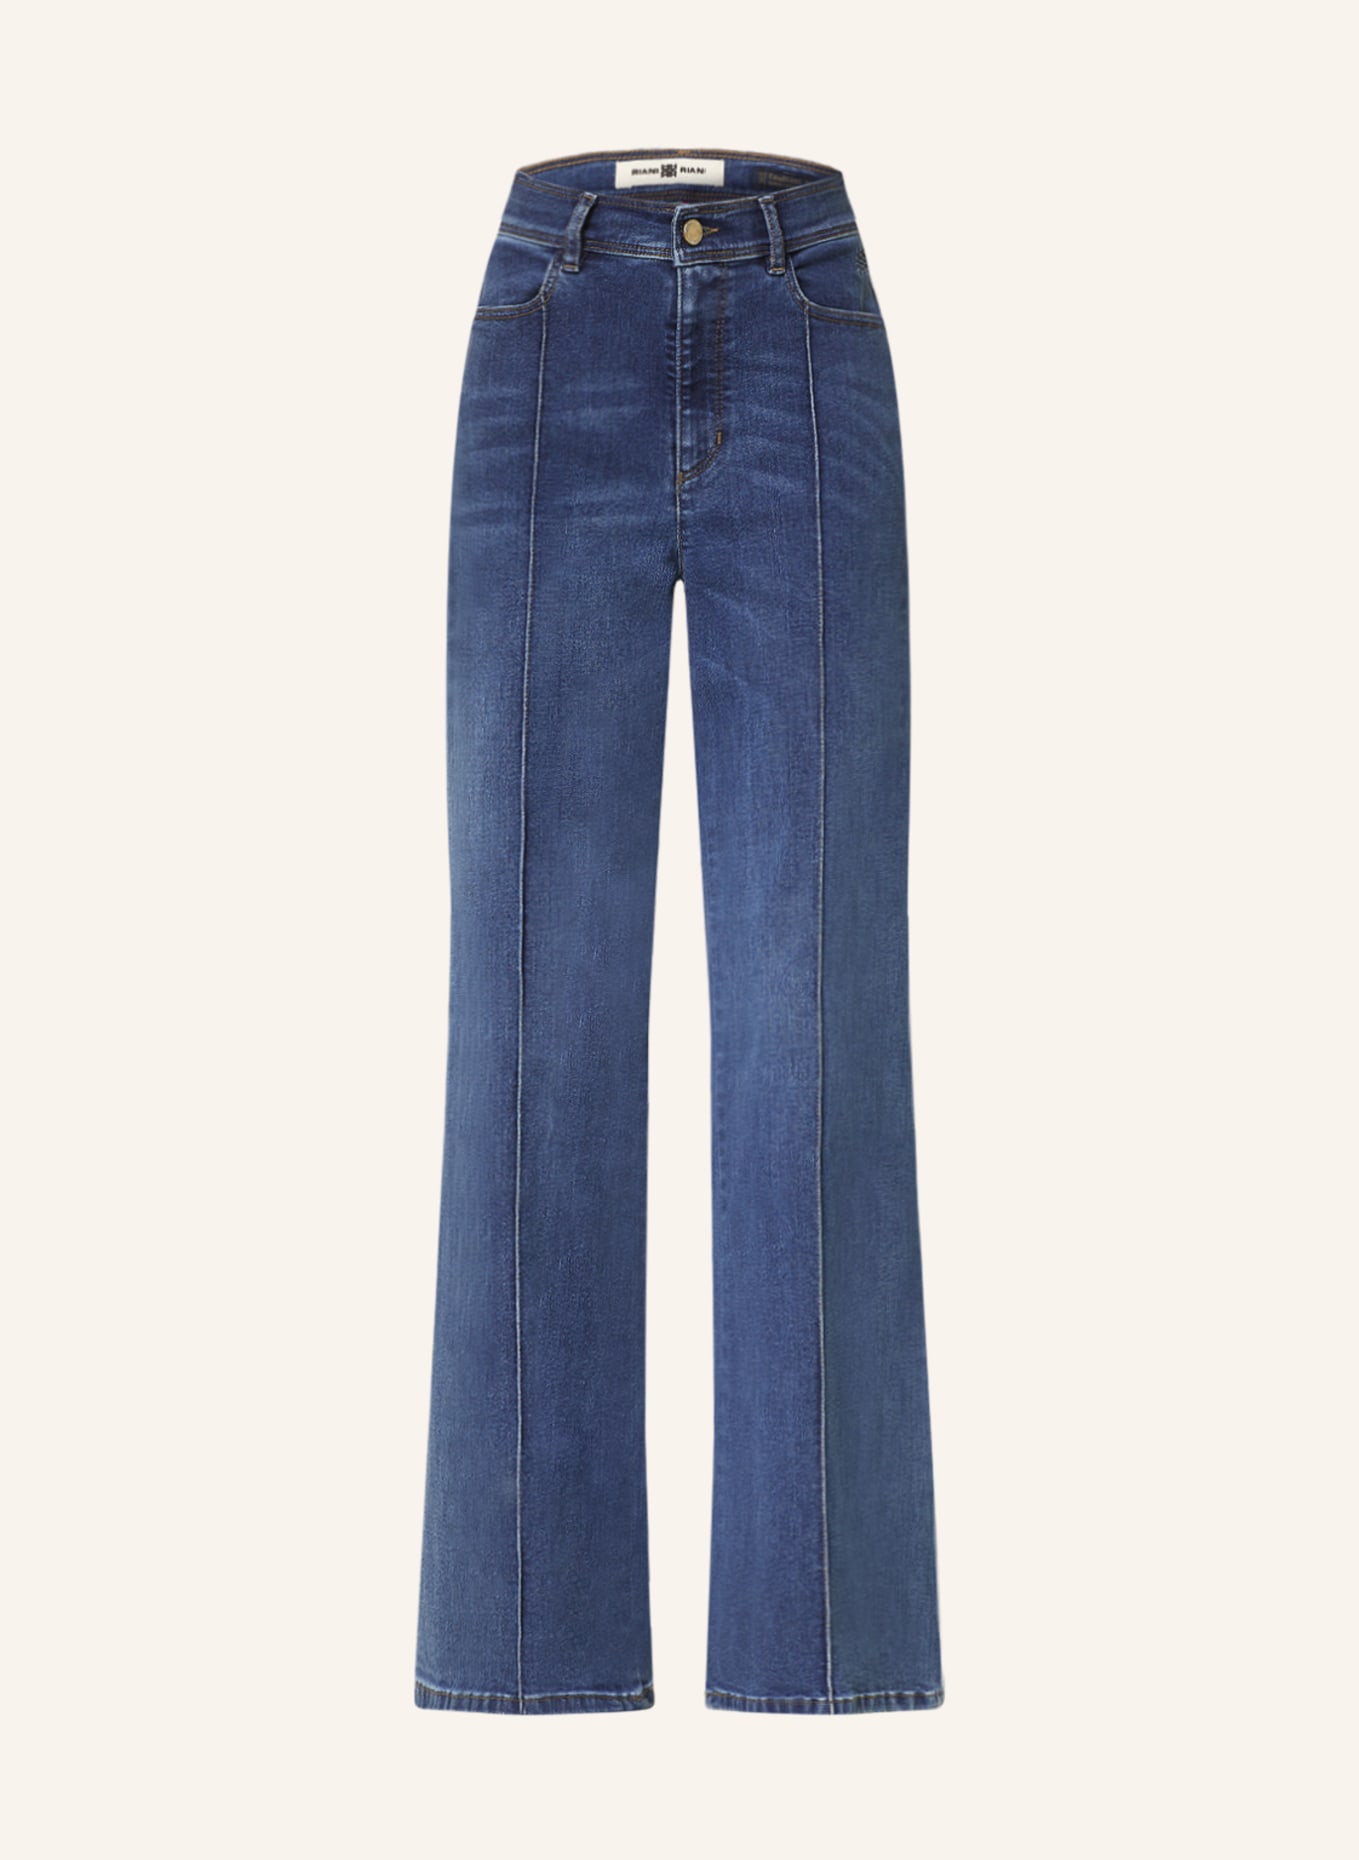 RIANI Bootcut Jeans, Farbe: 406 BLUE USED WASH (Bild 1)